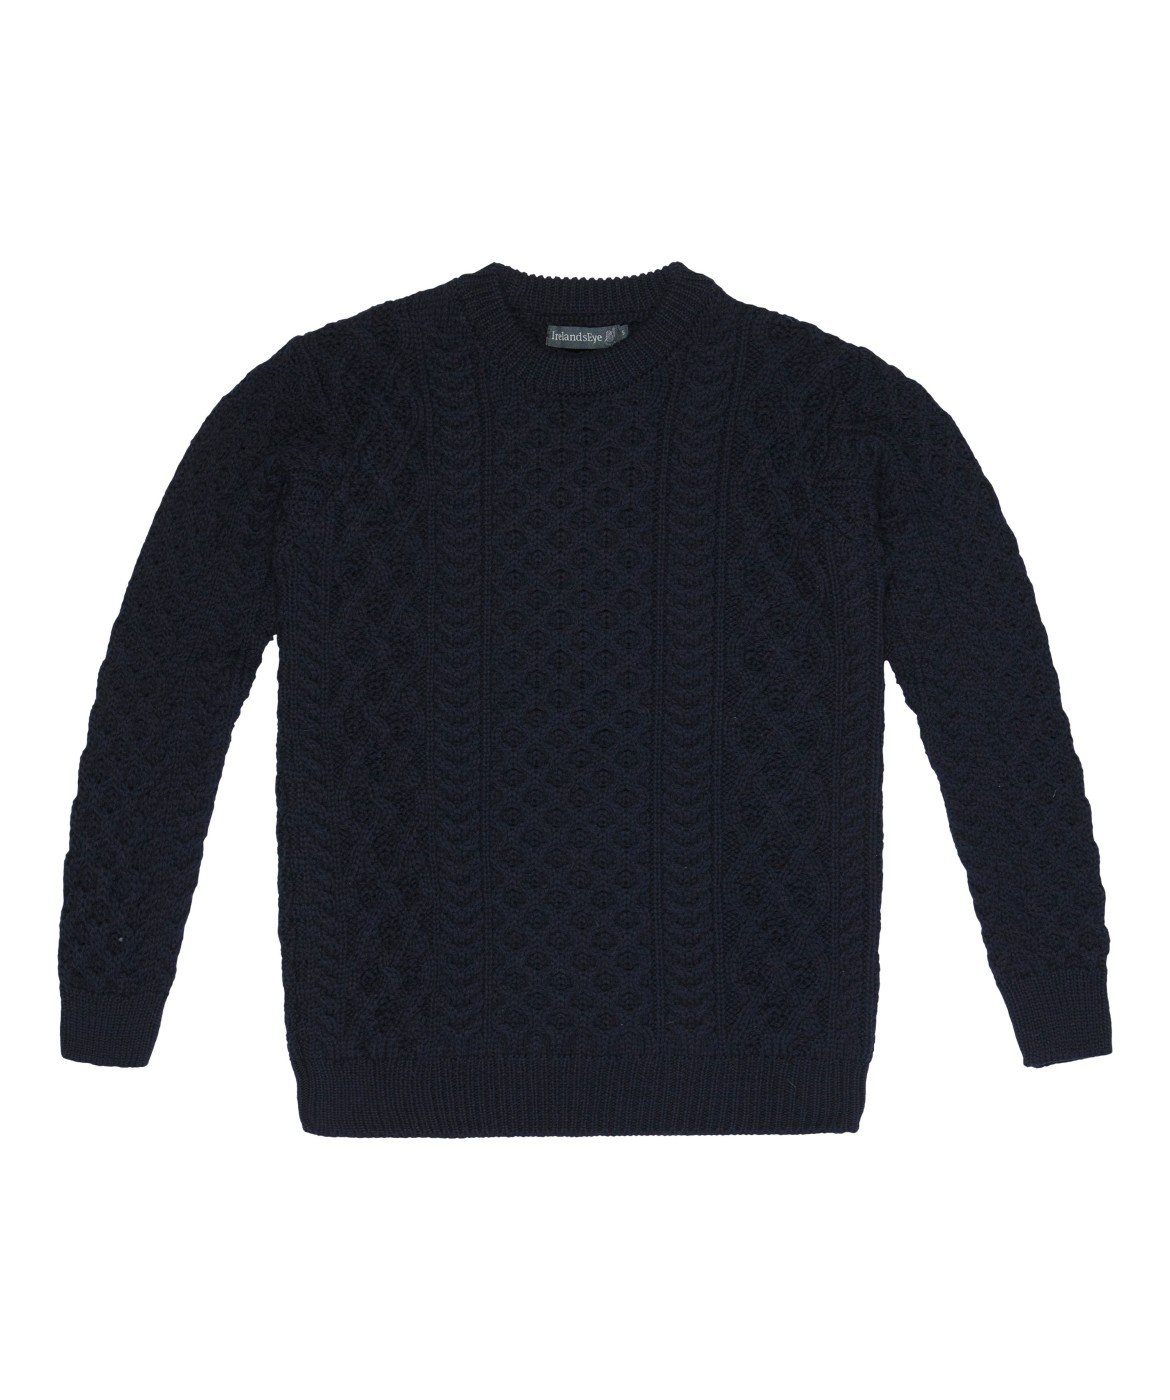  Merino Wool Navy Aran Sweater